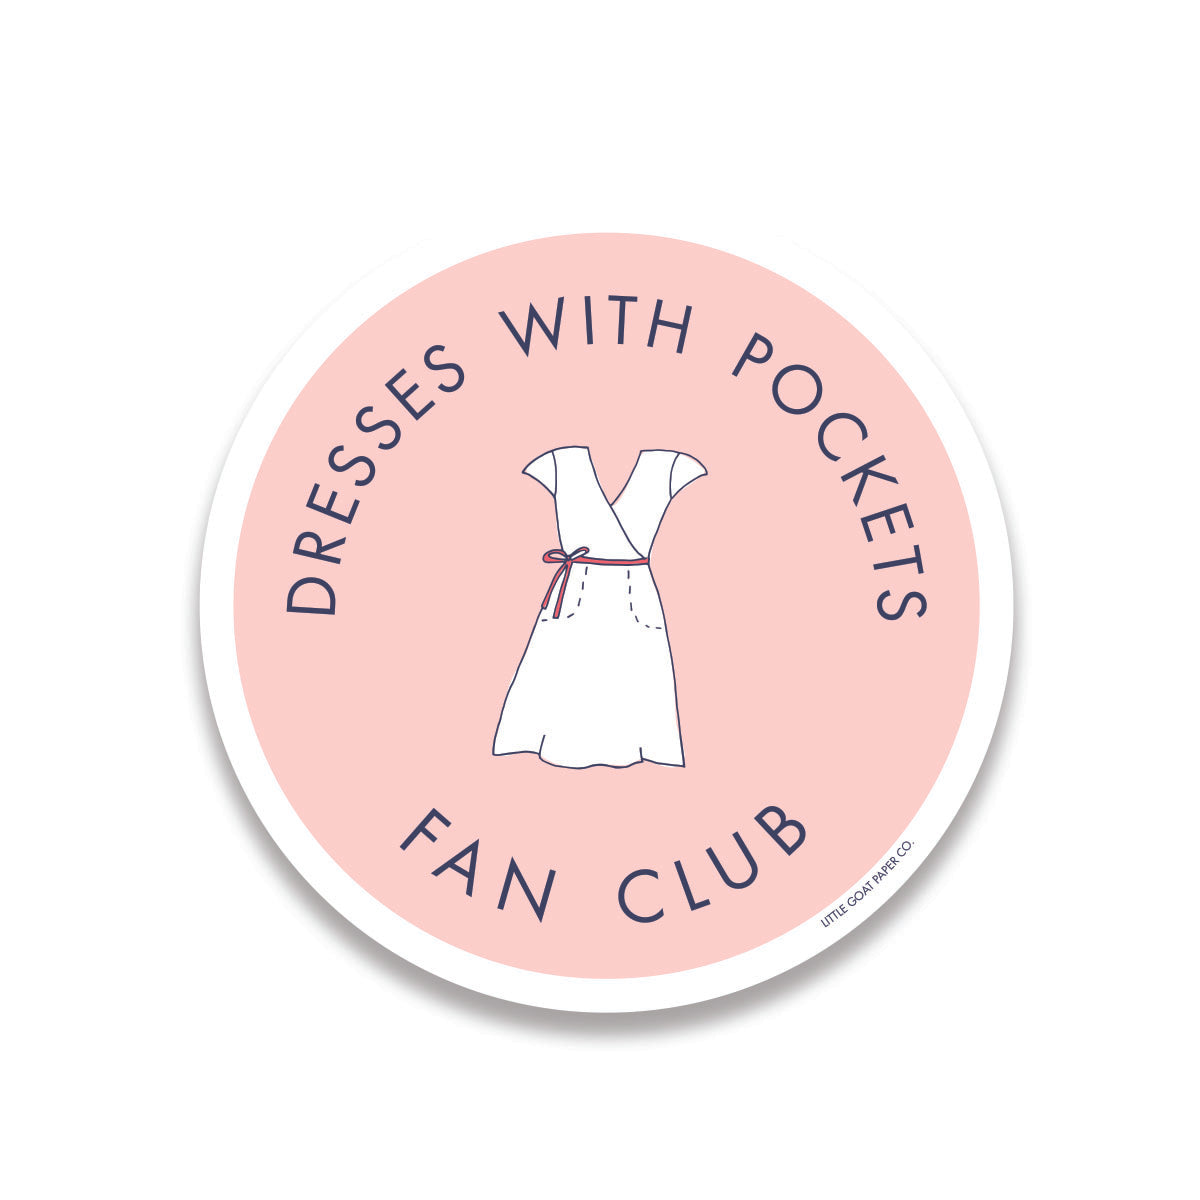 dresses with pockets fan club sticker